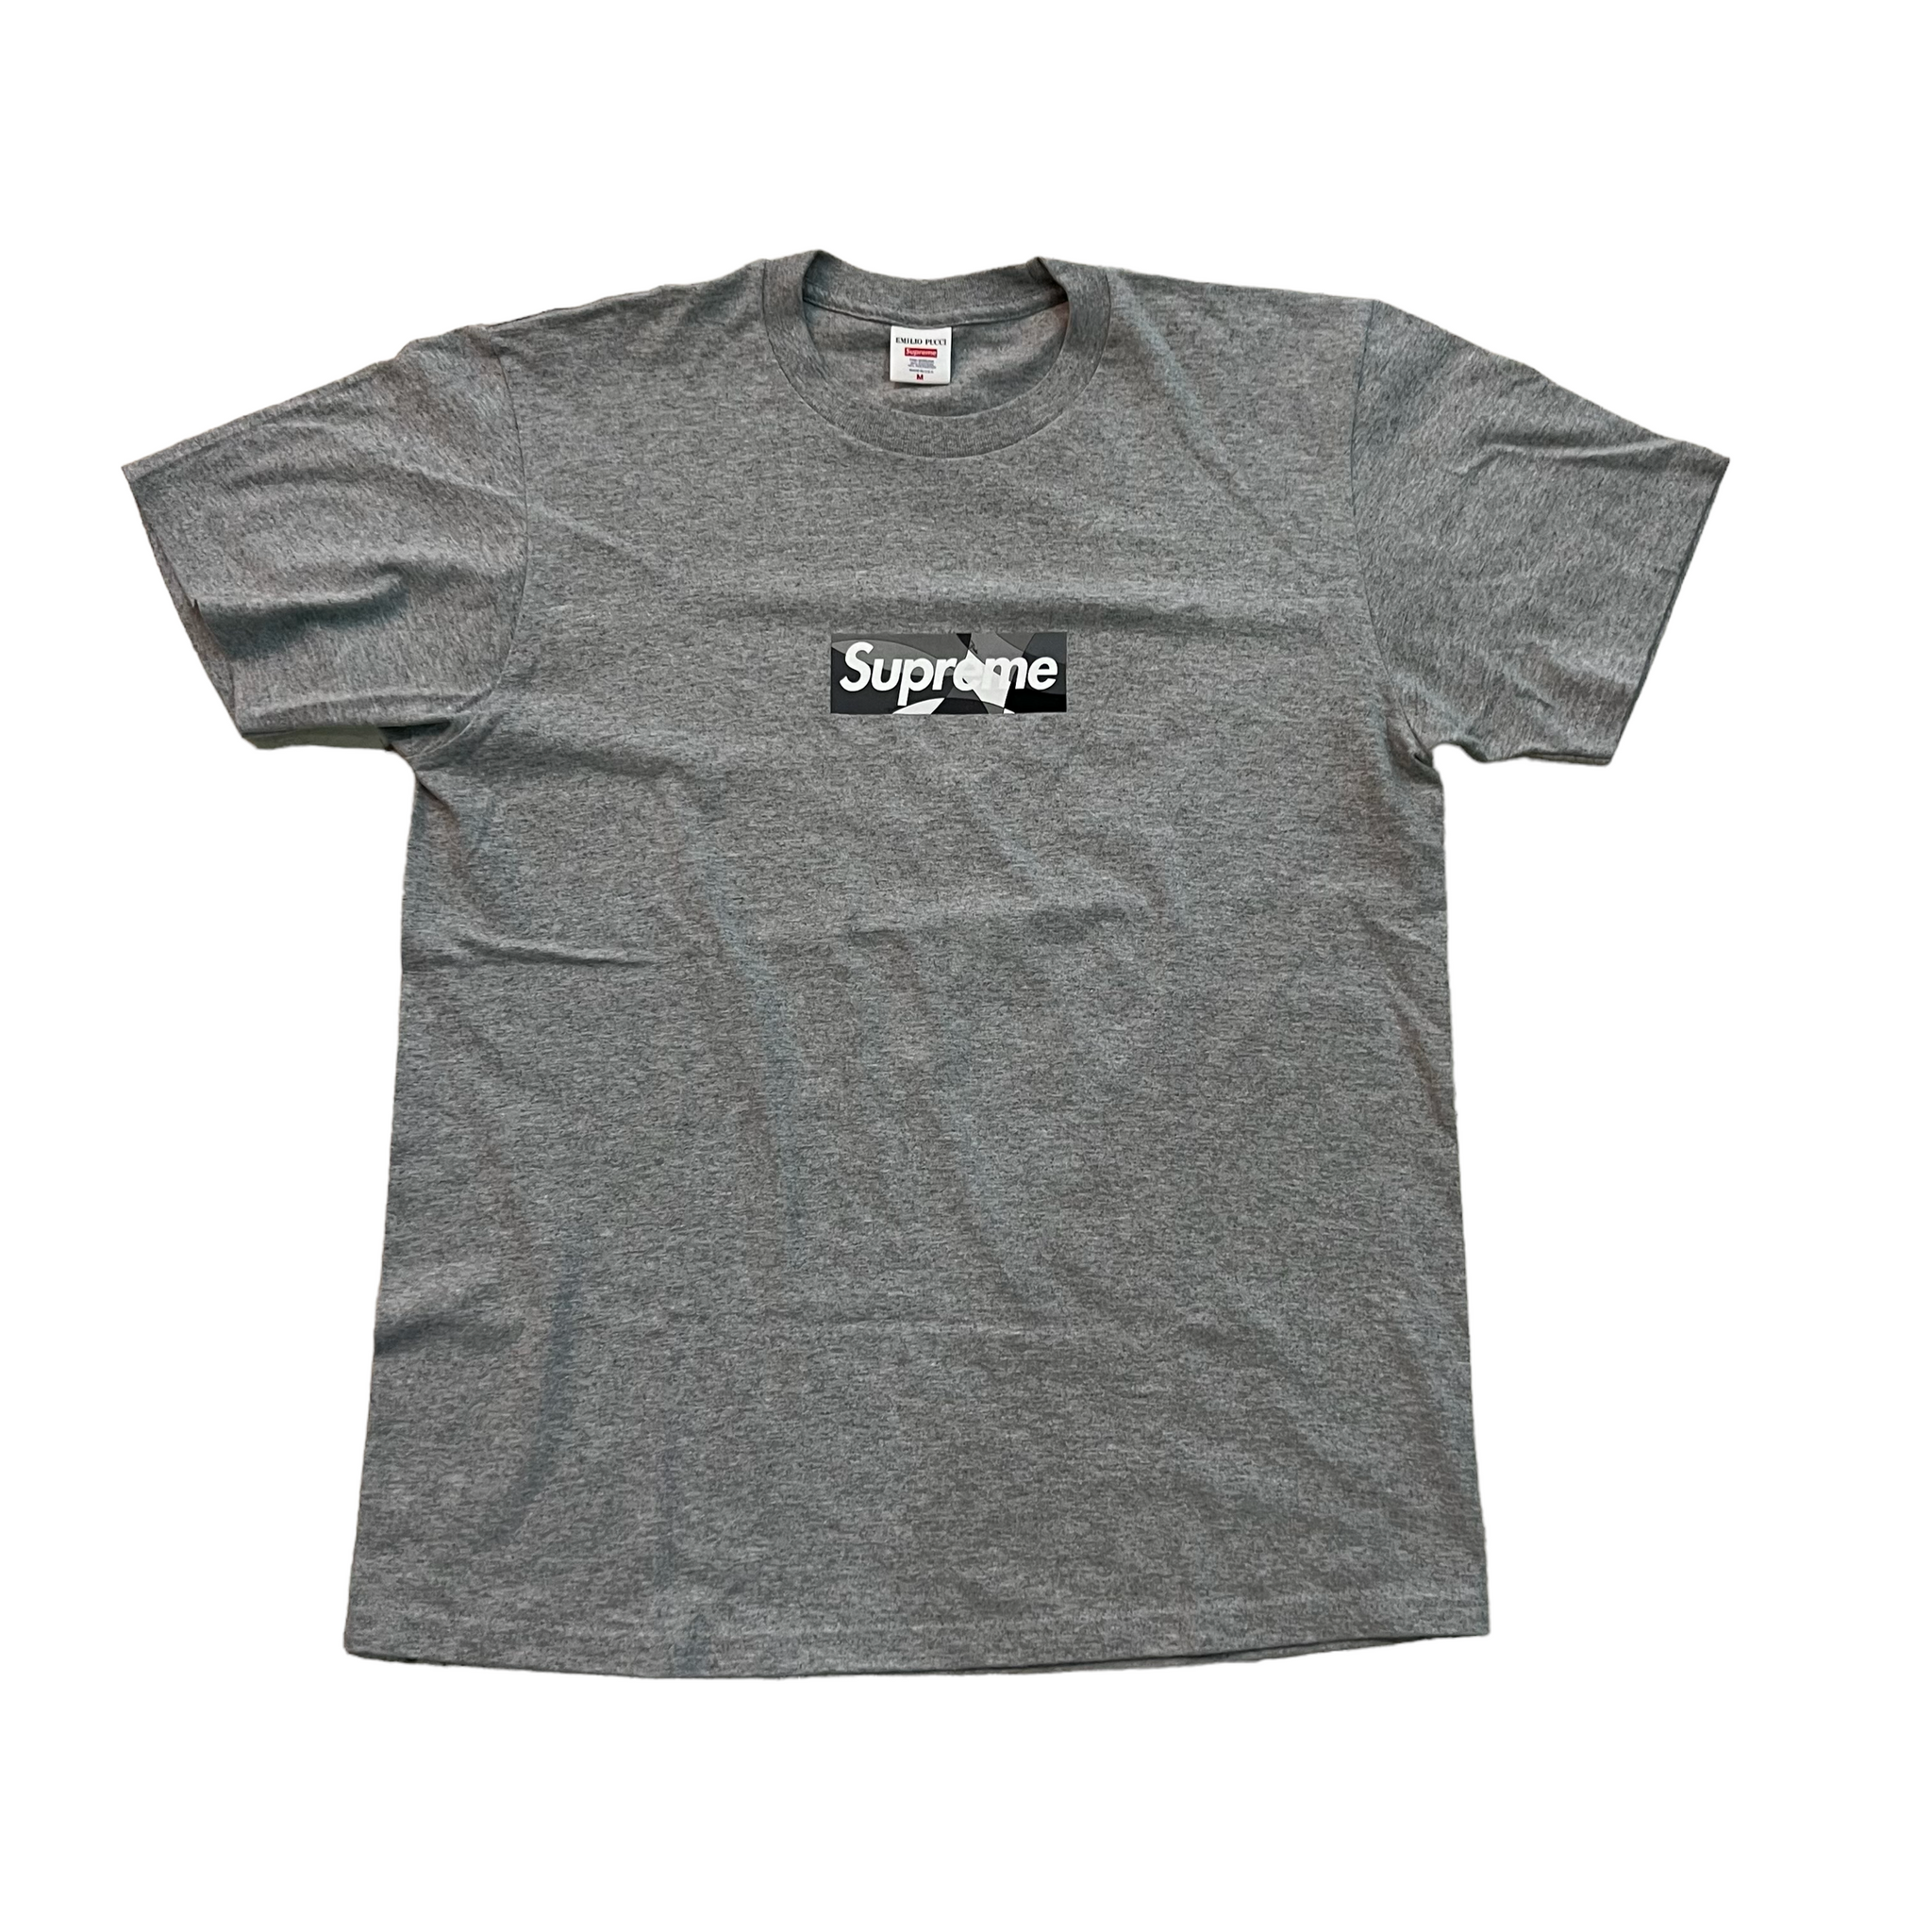 Supreme x Emilio Pucci Box Logo Crew Neck T-Shirt - Grey